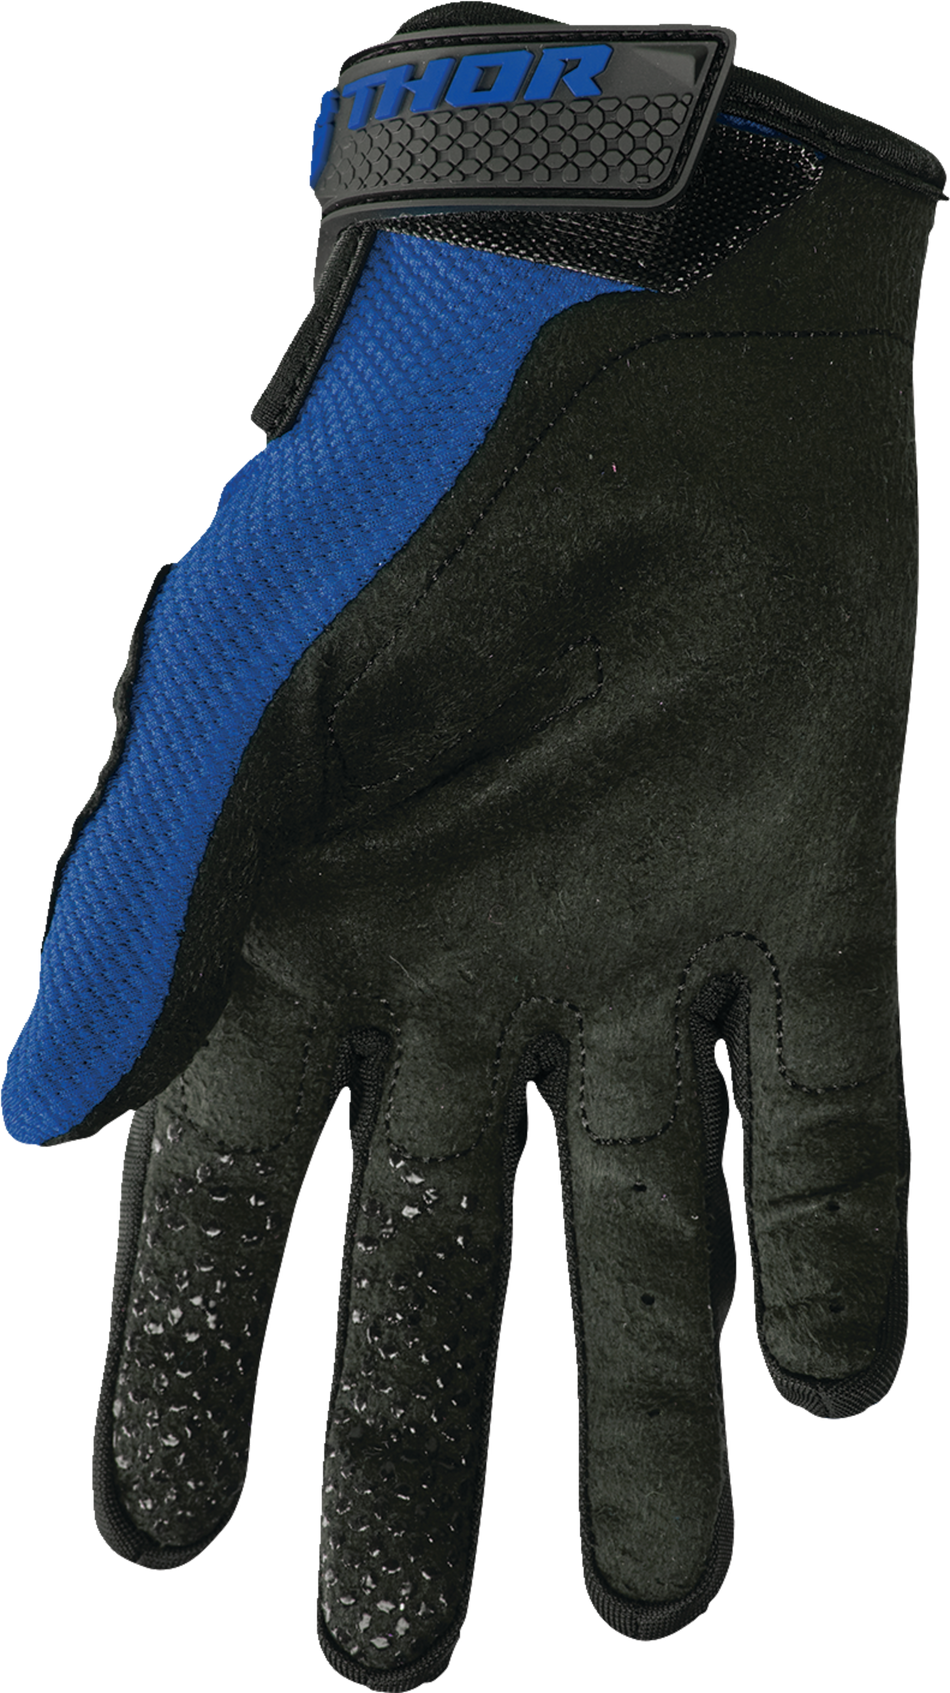 THOR Sector Gloves - Navy/White - Large 3330-7264